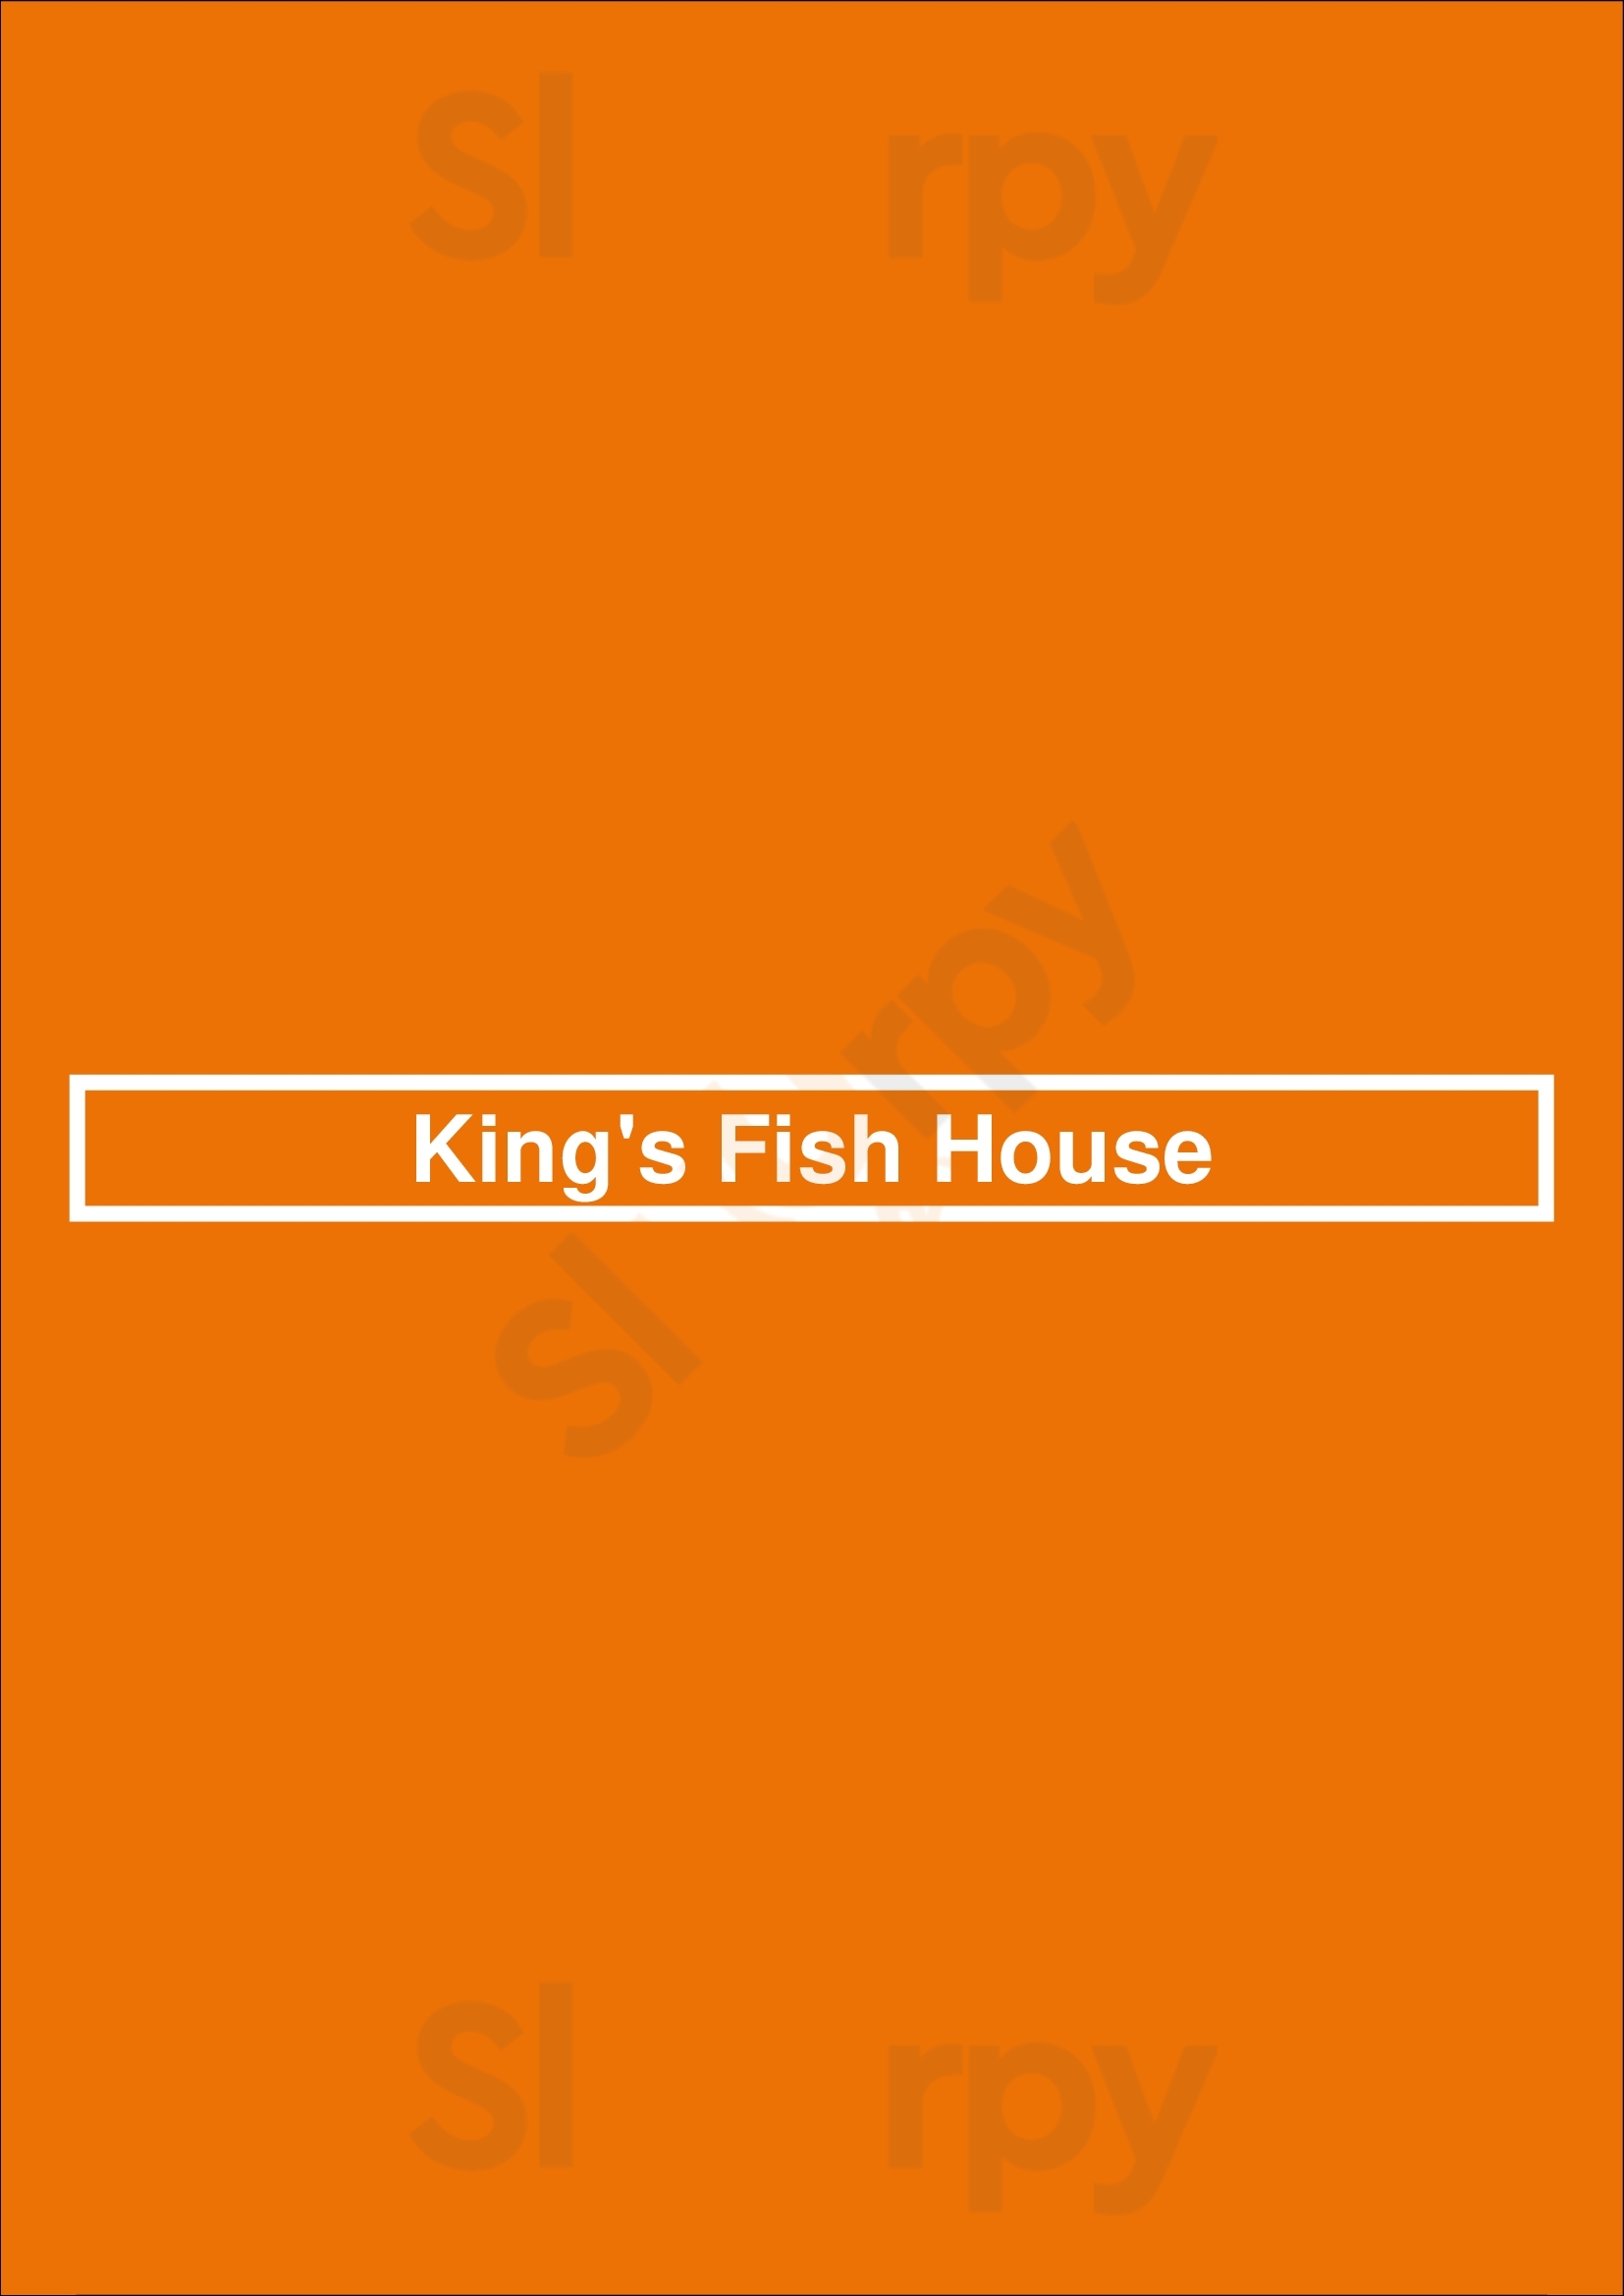 King's Fish House Huntington Beach Menu - 1